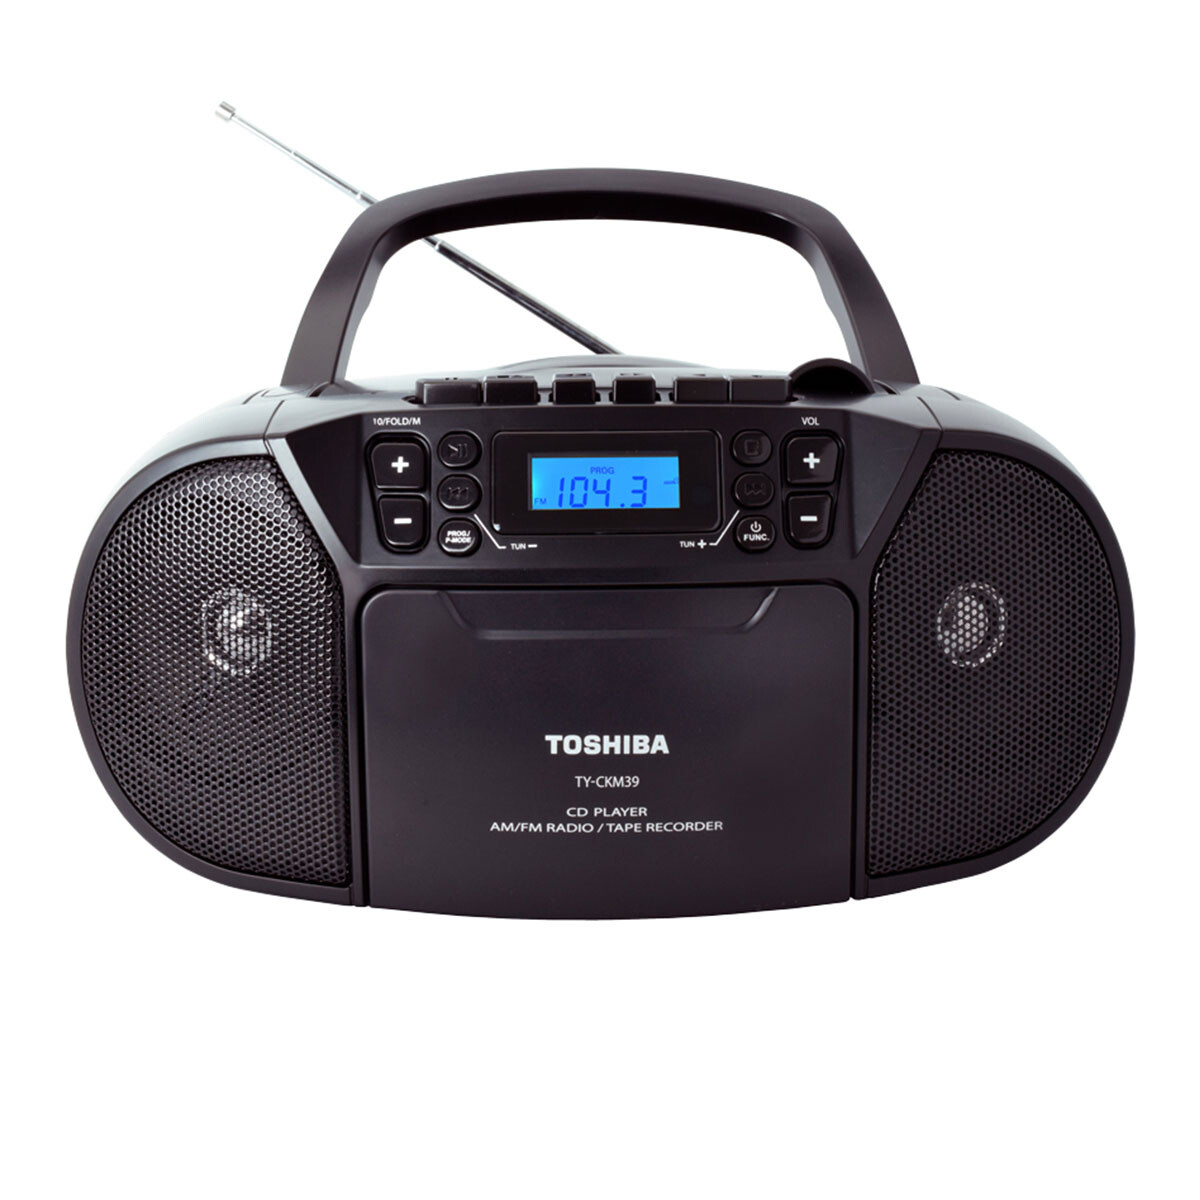 Radio Amfm Cassette Toshiba Ckm39 Negro 